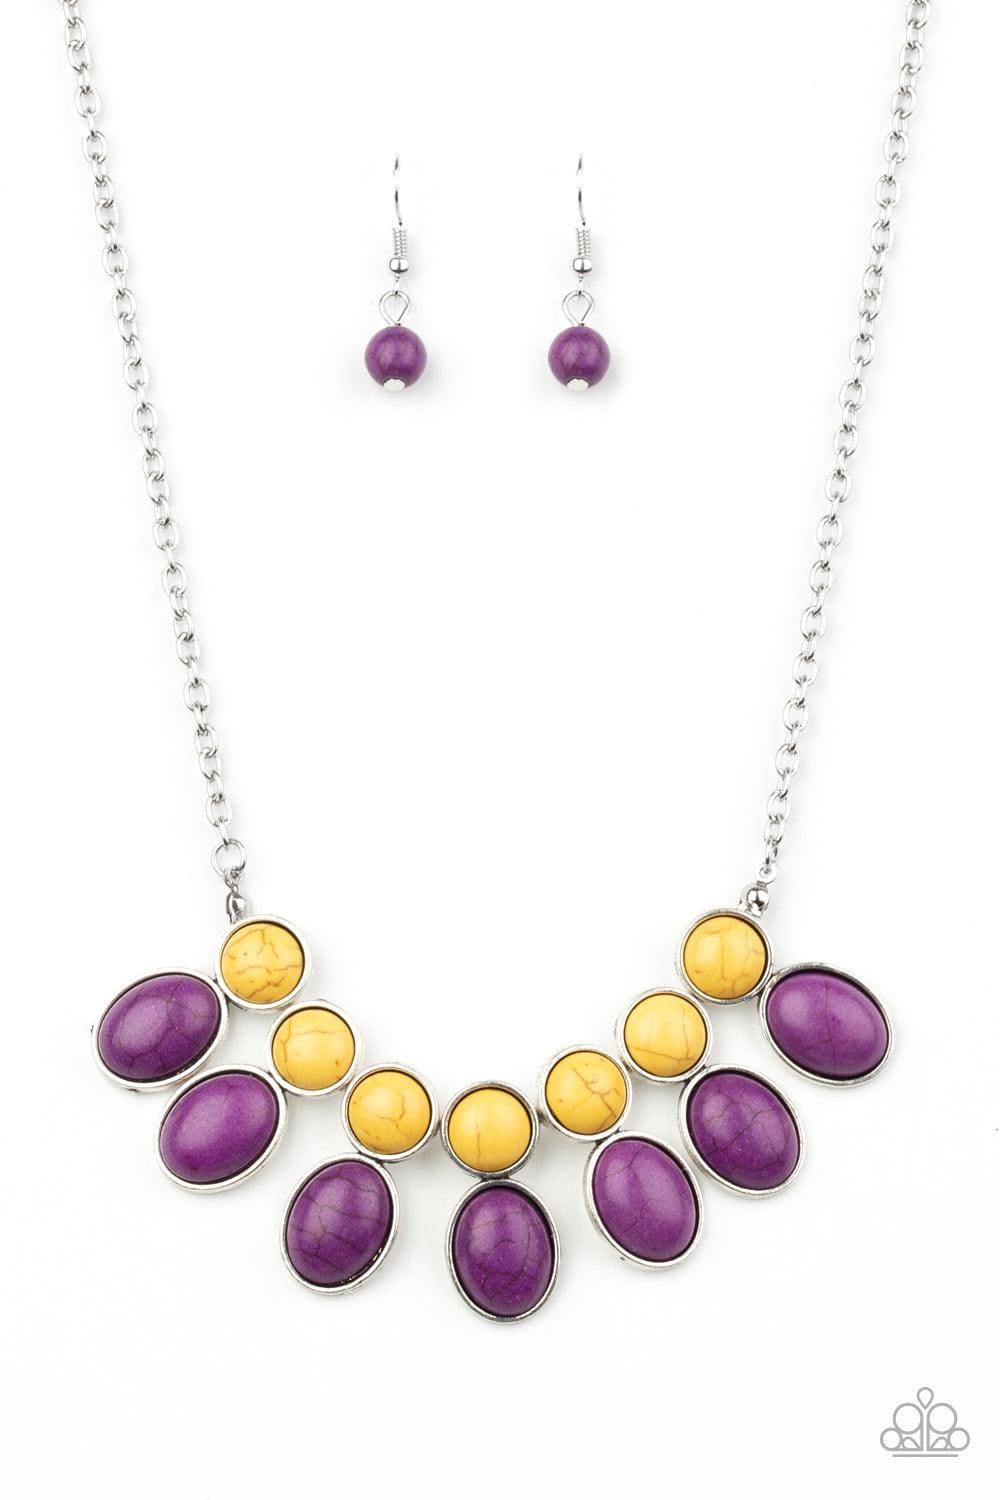 Paparazzi Accessories - Environmental Impact - Purple Necklace - Bling by JessieK